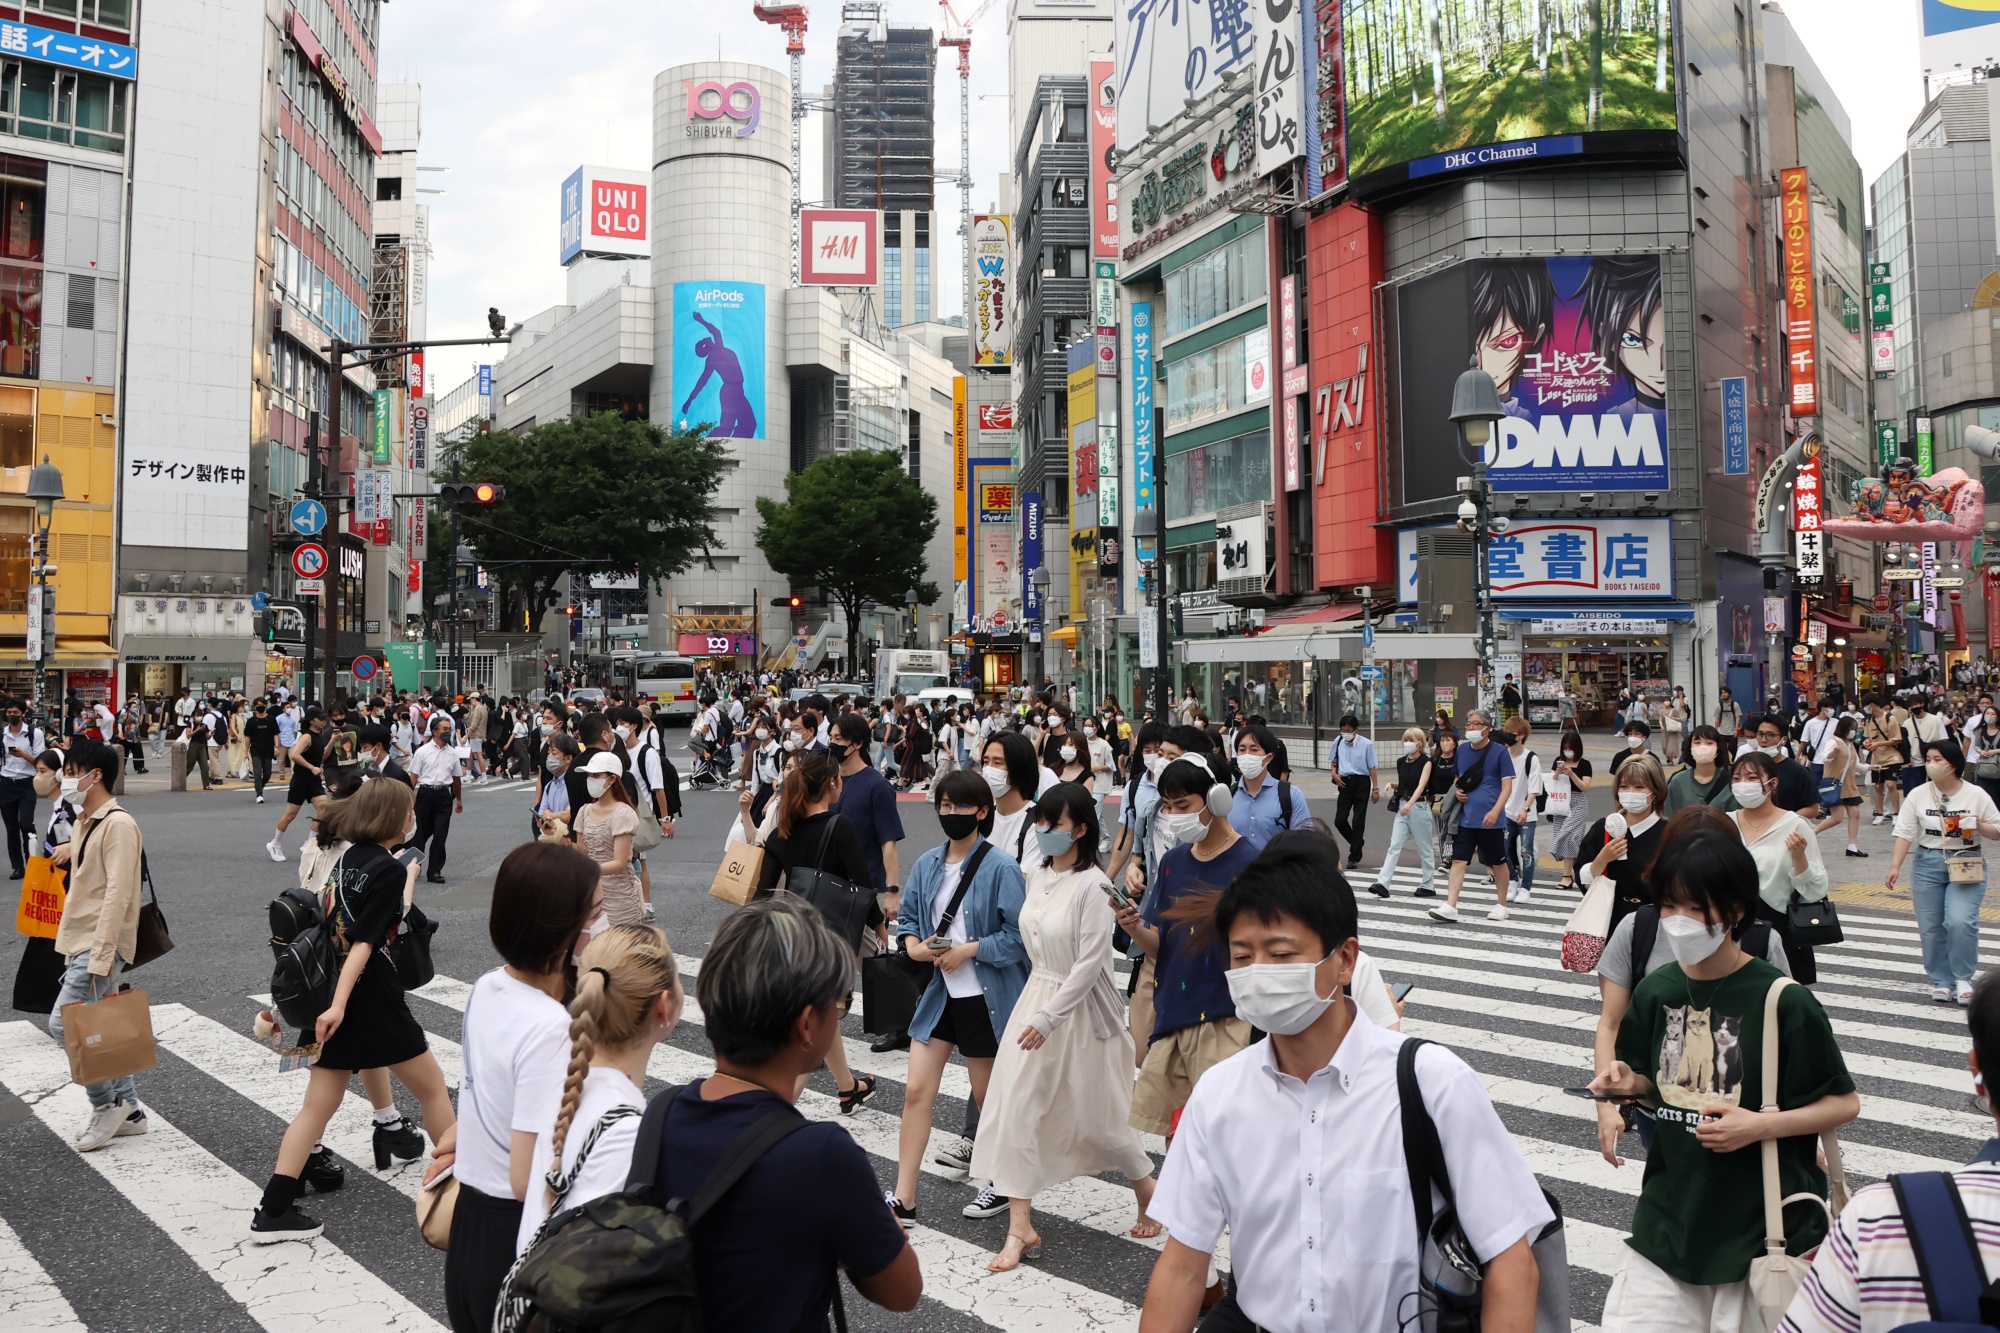 The Shibuya Scramble Crossing on July 20.